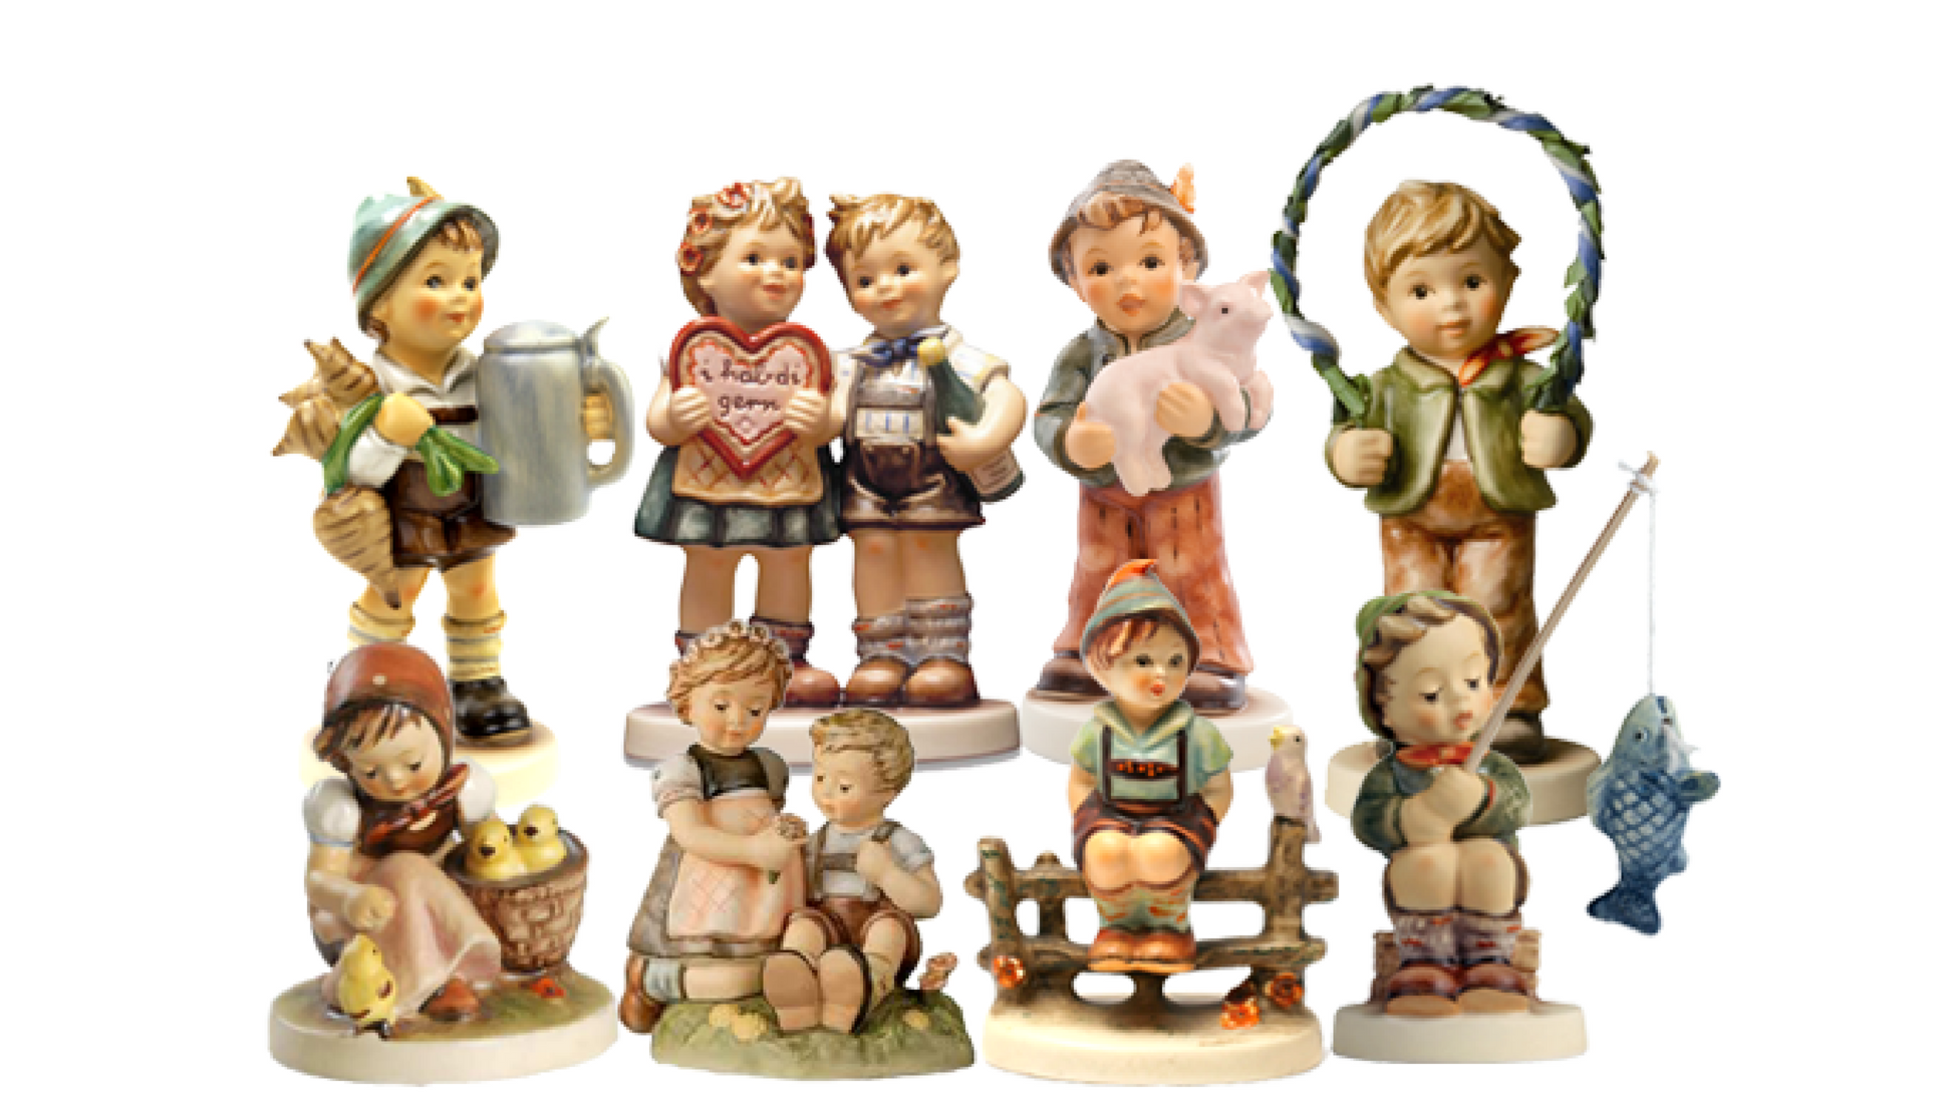 Most valuable hummel figurines